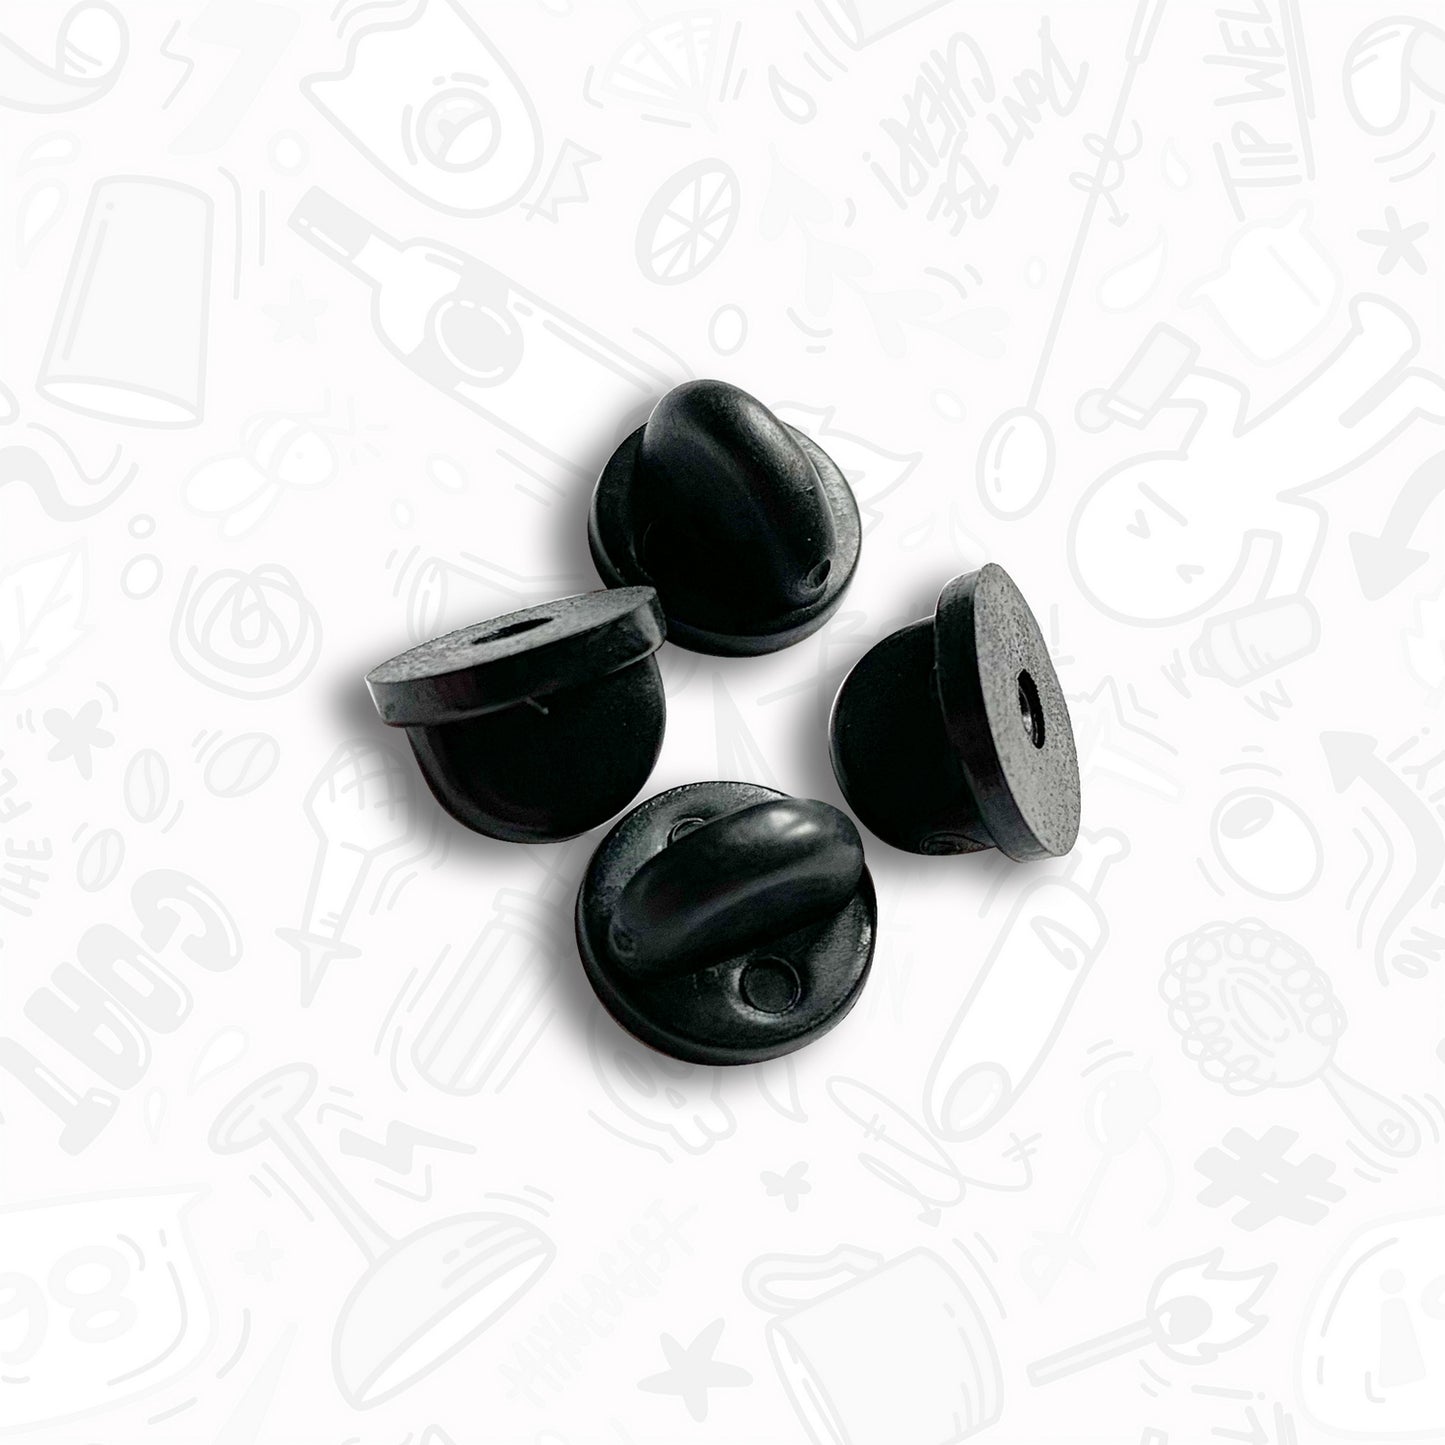 Soft Black Rubber Pin Backs for Enamel Pins